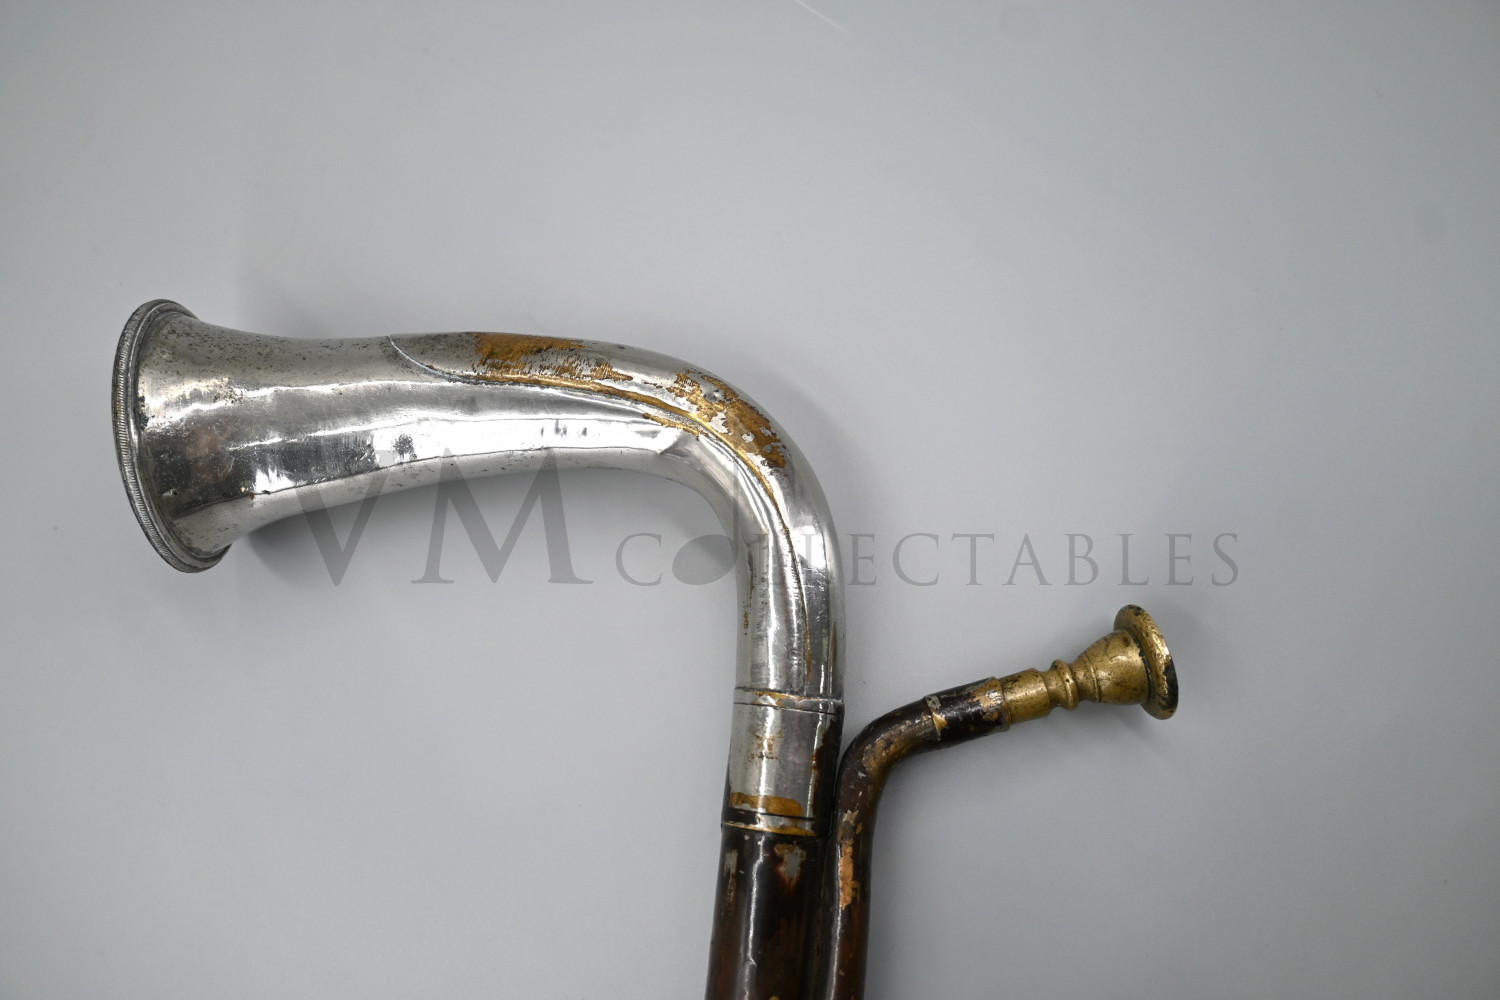 Walking-stick-trumpet-vm-collectables5